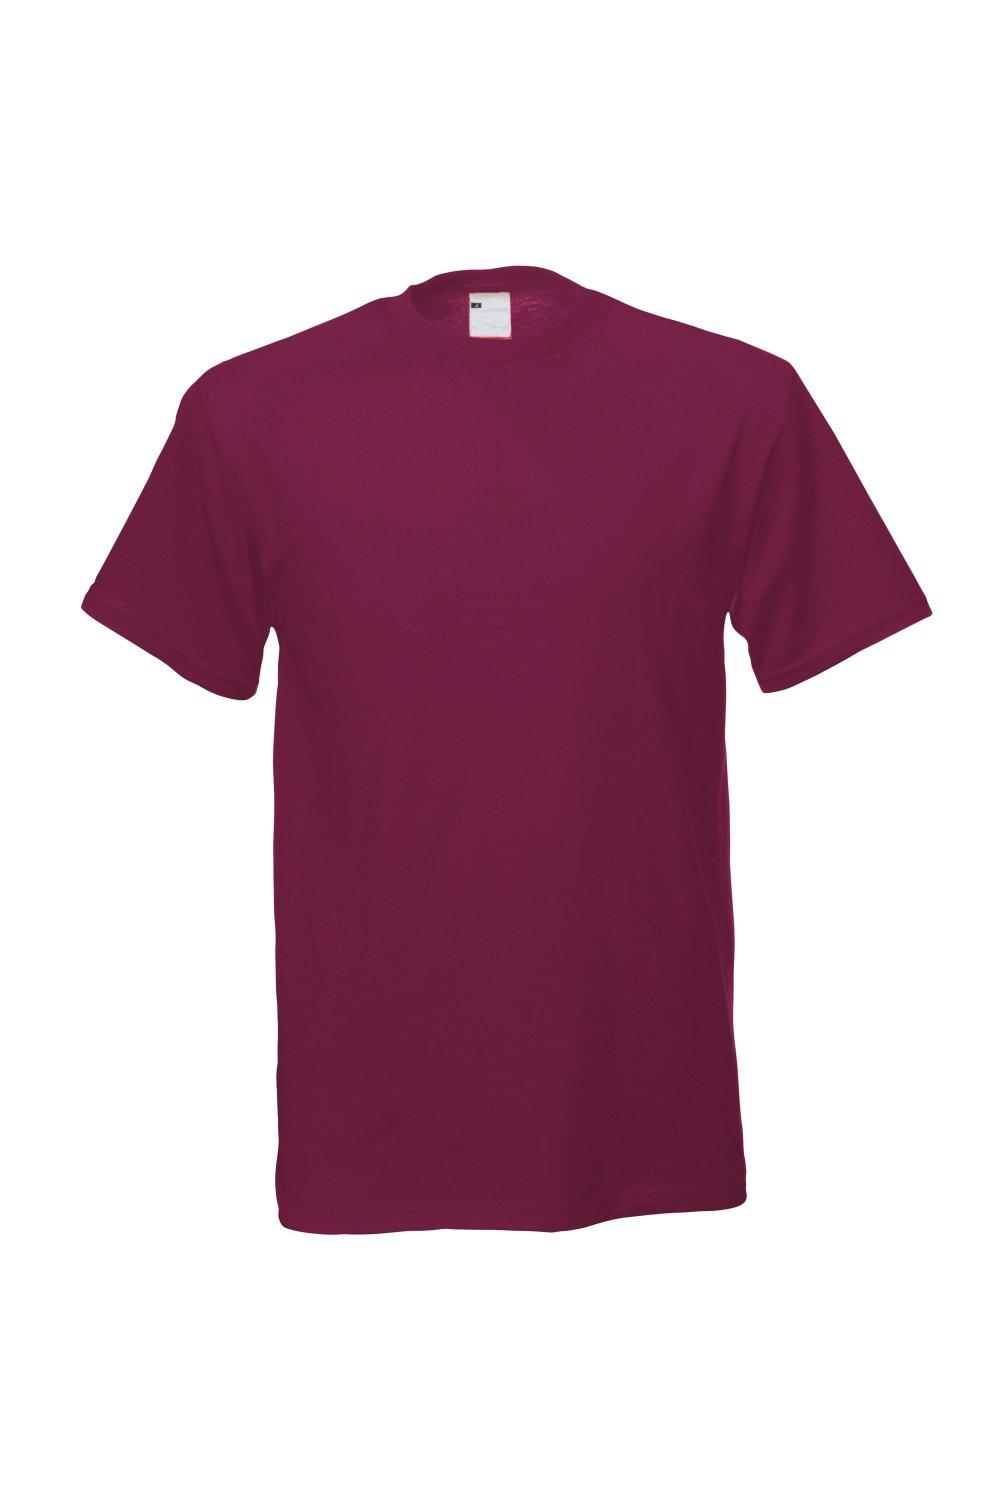 Повседневная футболка с коротким рукавом Universal Textiles, красный мужская футболка лиса русская краса xl серый меланж